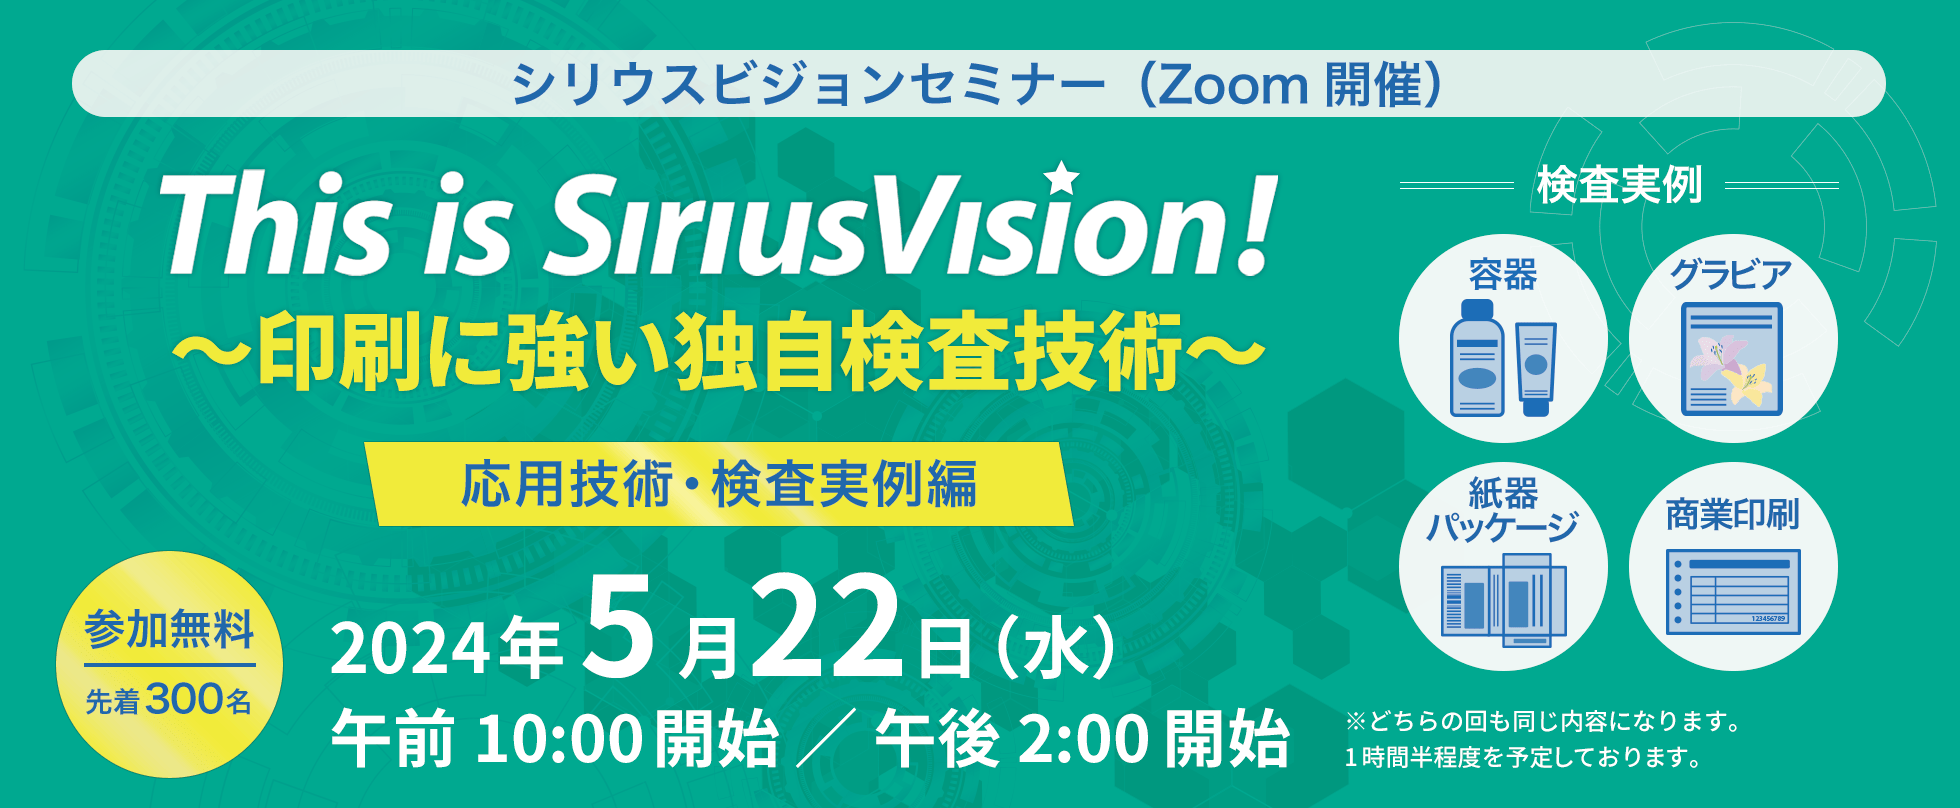 This is Siriusvision!～印刷に強い独自検査技術～【応用技術・検査実例】